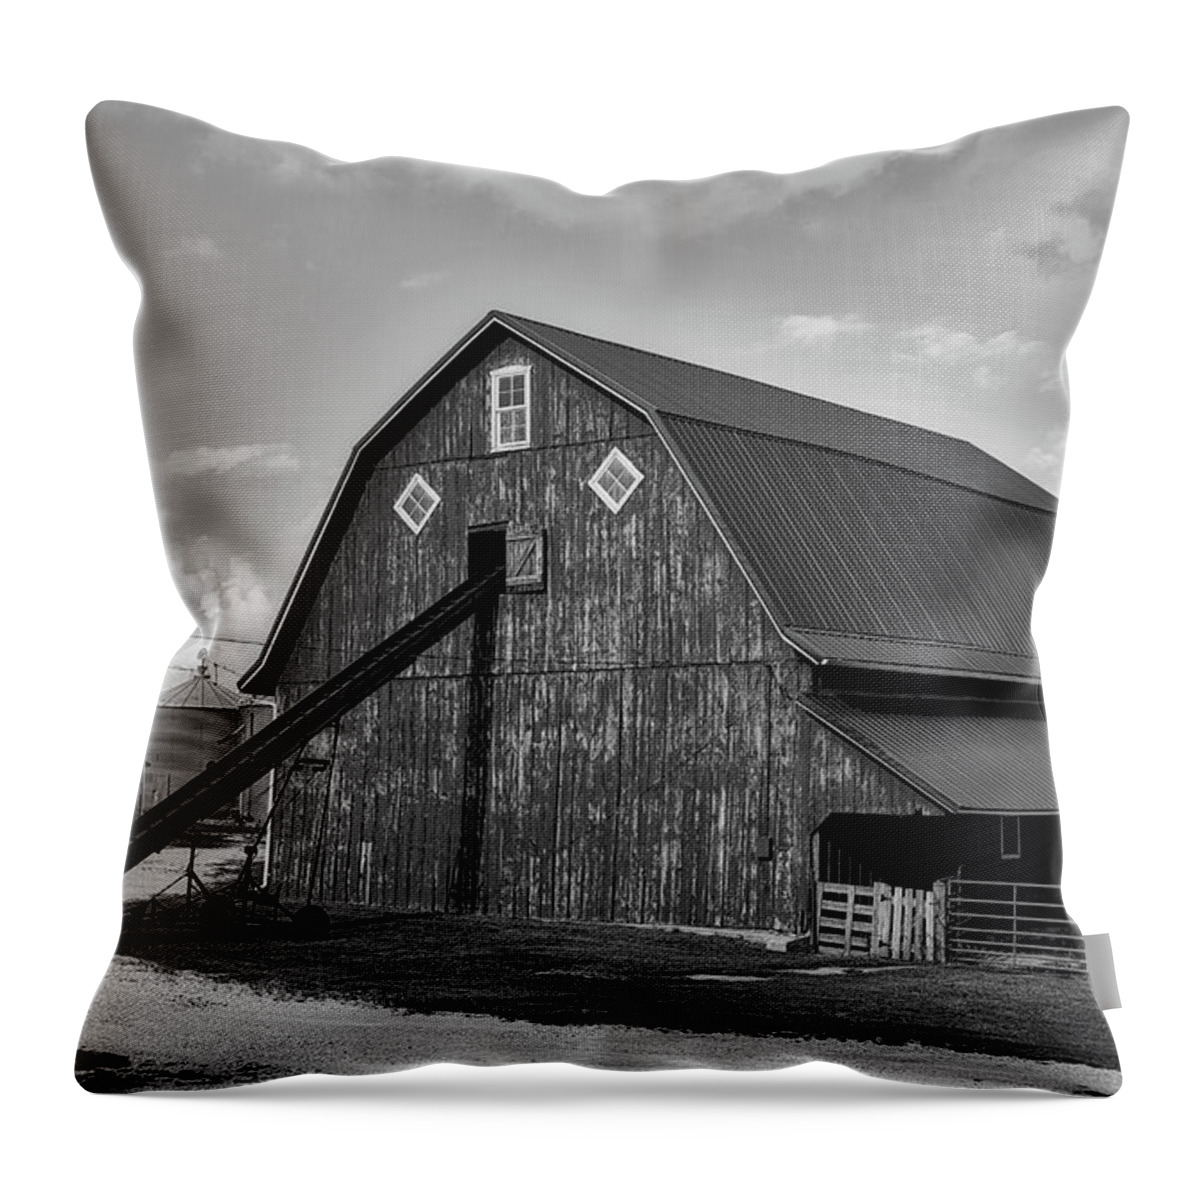 Iowa Throw Pillow featuring the photograph Iowa Farm Scene by Mountain Dreams